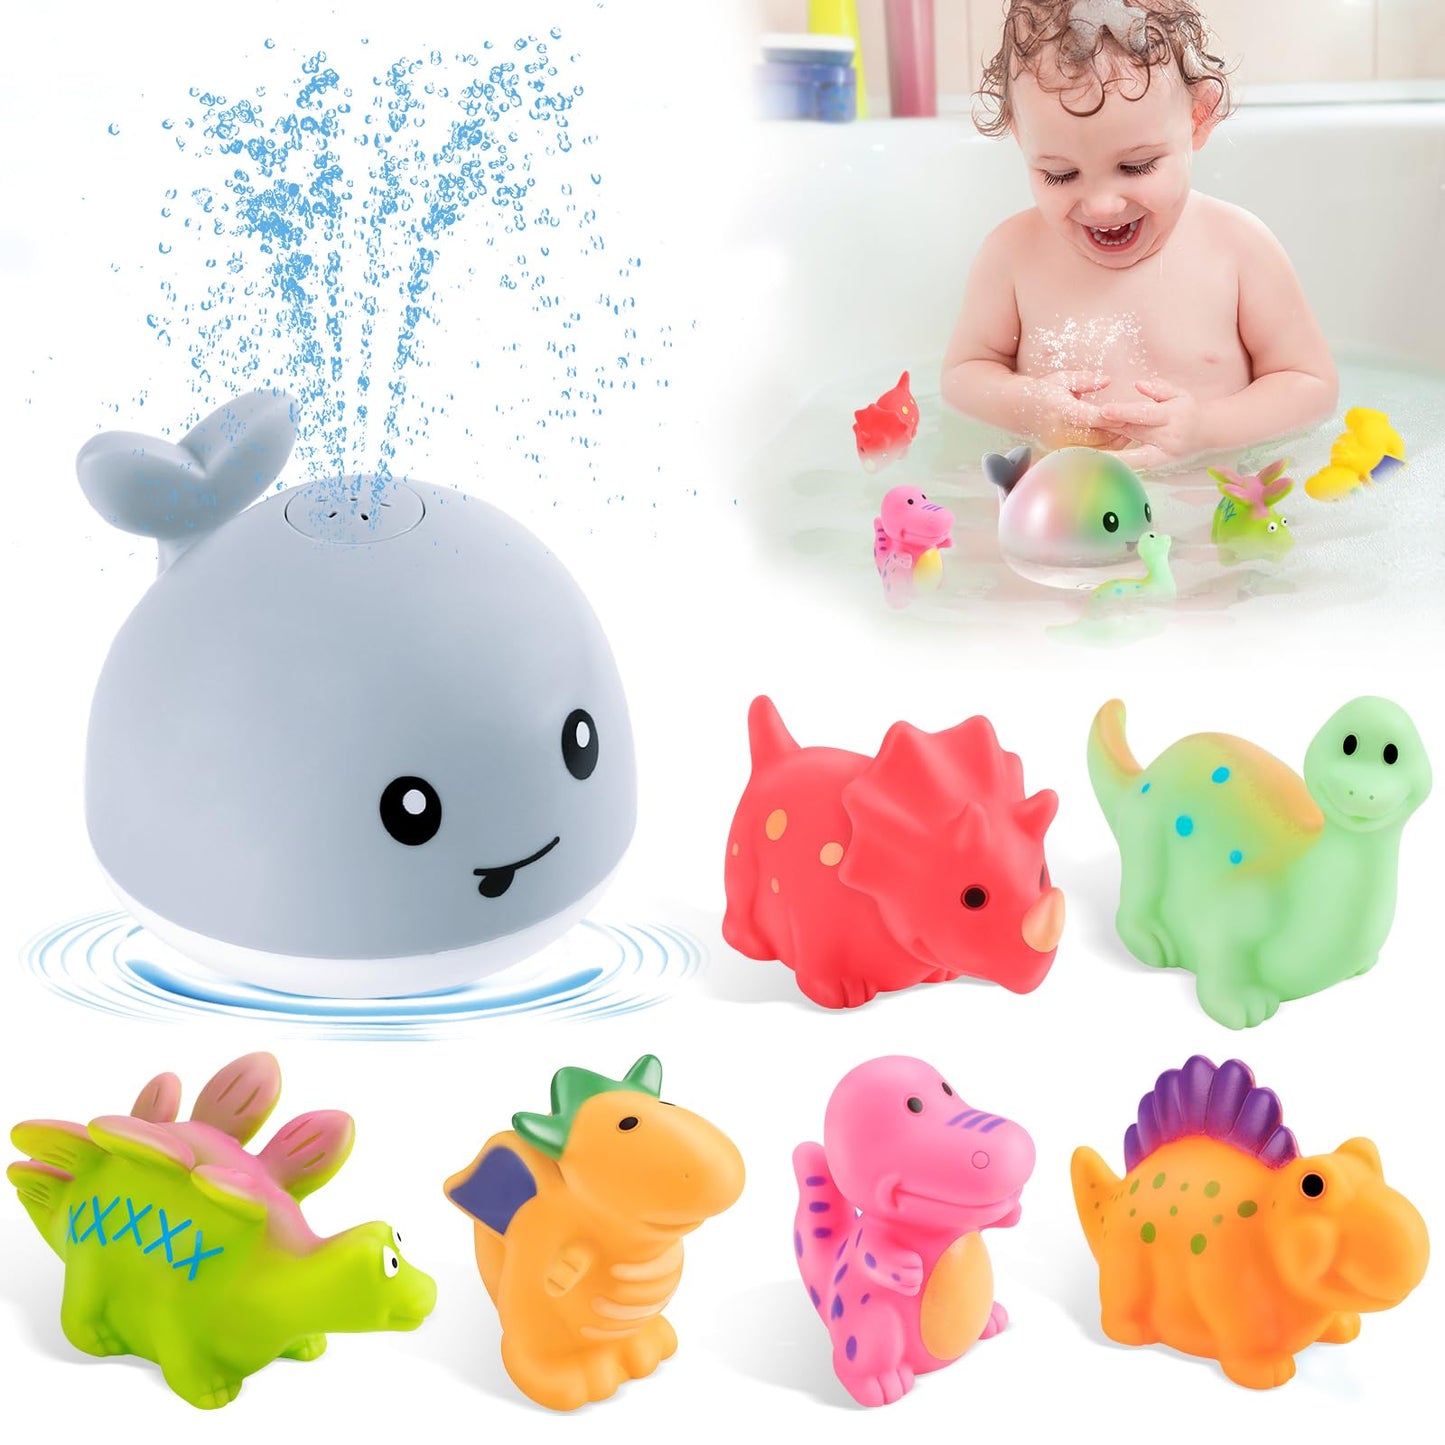 Whale Bath Toy Rechargeable with Dinosaur Bath Toys-Grey - Gigilli